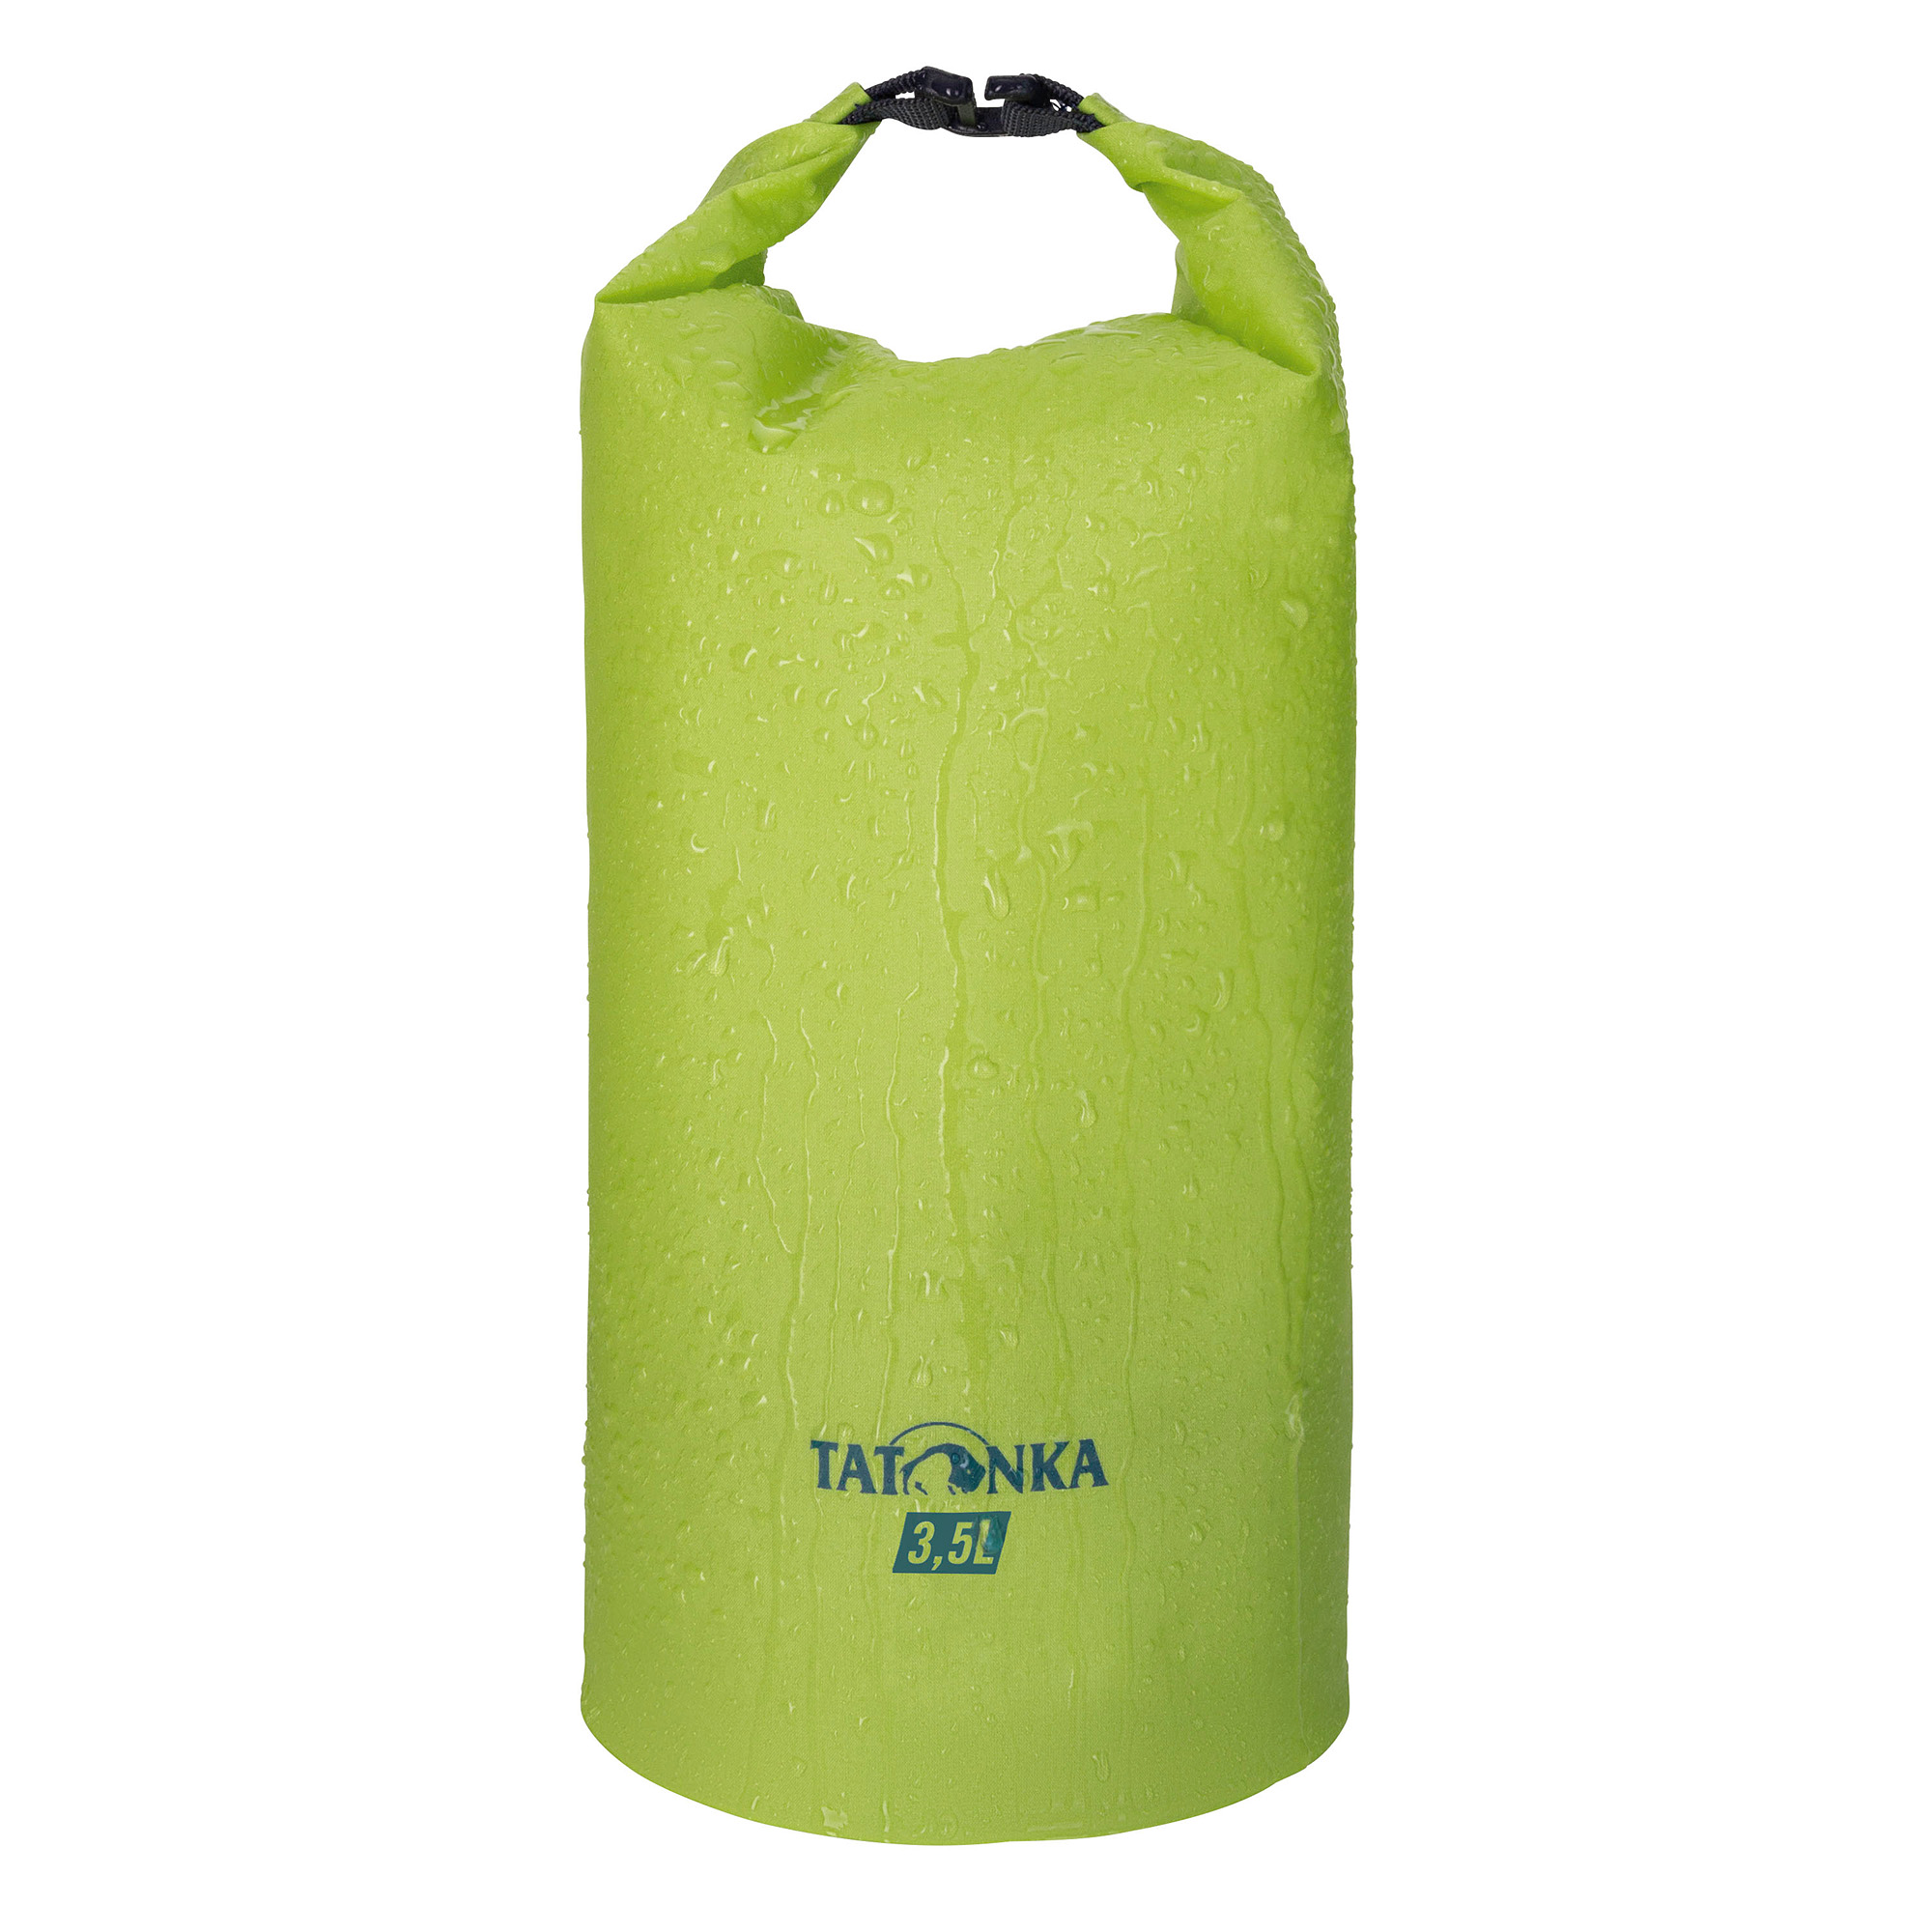 Tatonka WP Stuffbag Light 3,5l lime gelb Reisezubehör 4013236382402